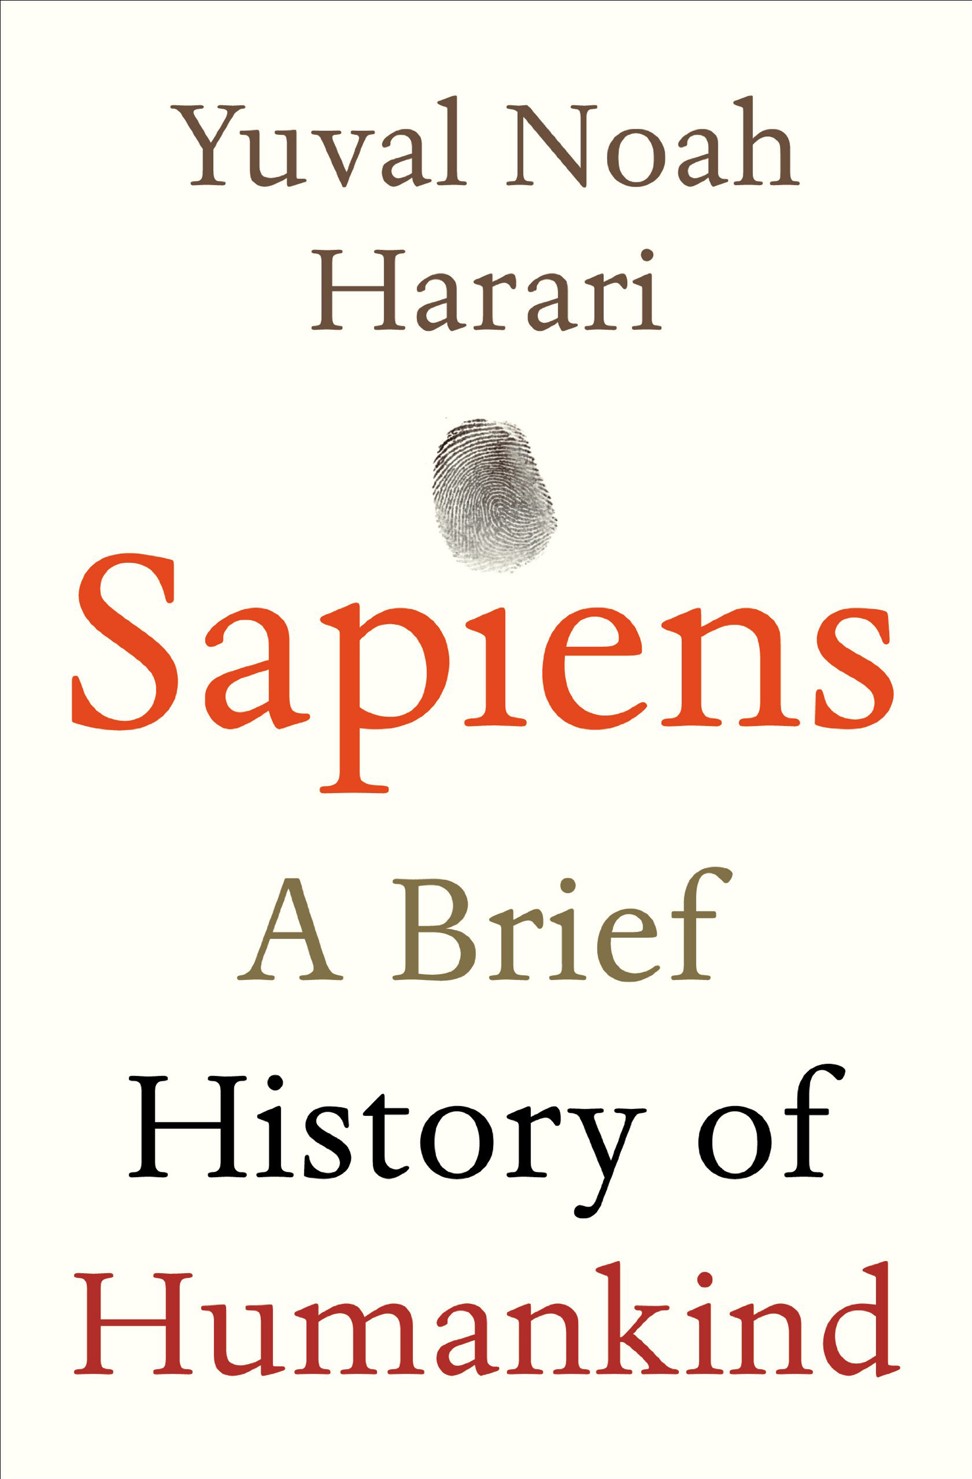 Sapiens tracks the evolution of humankind.